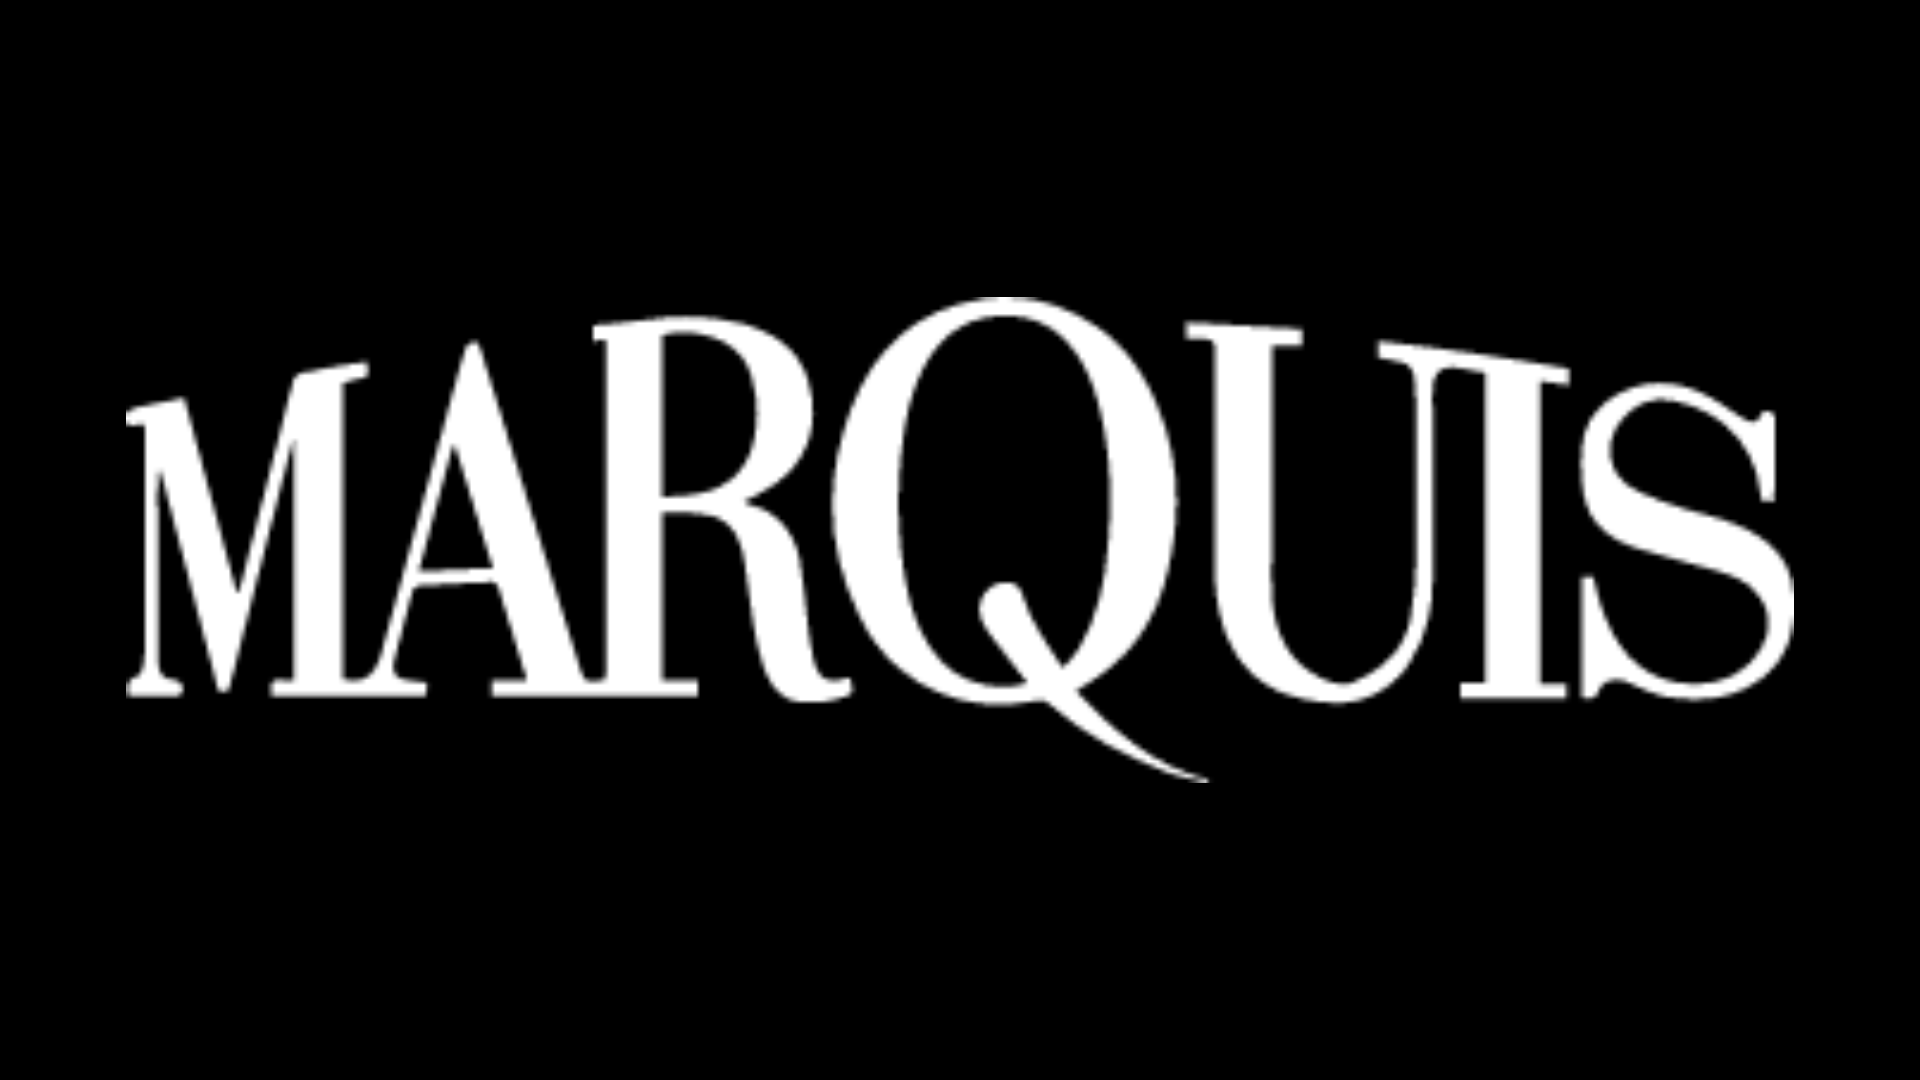 Marquis Magazine